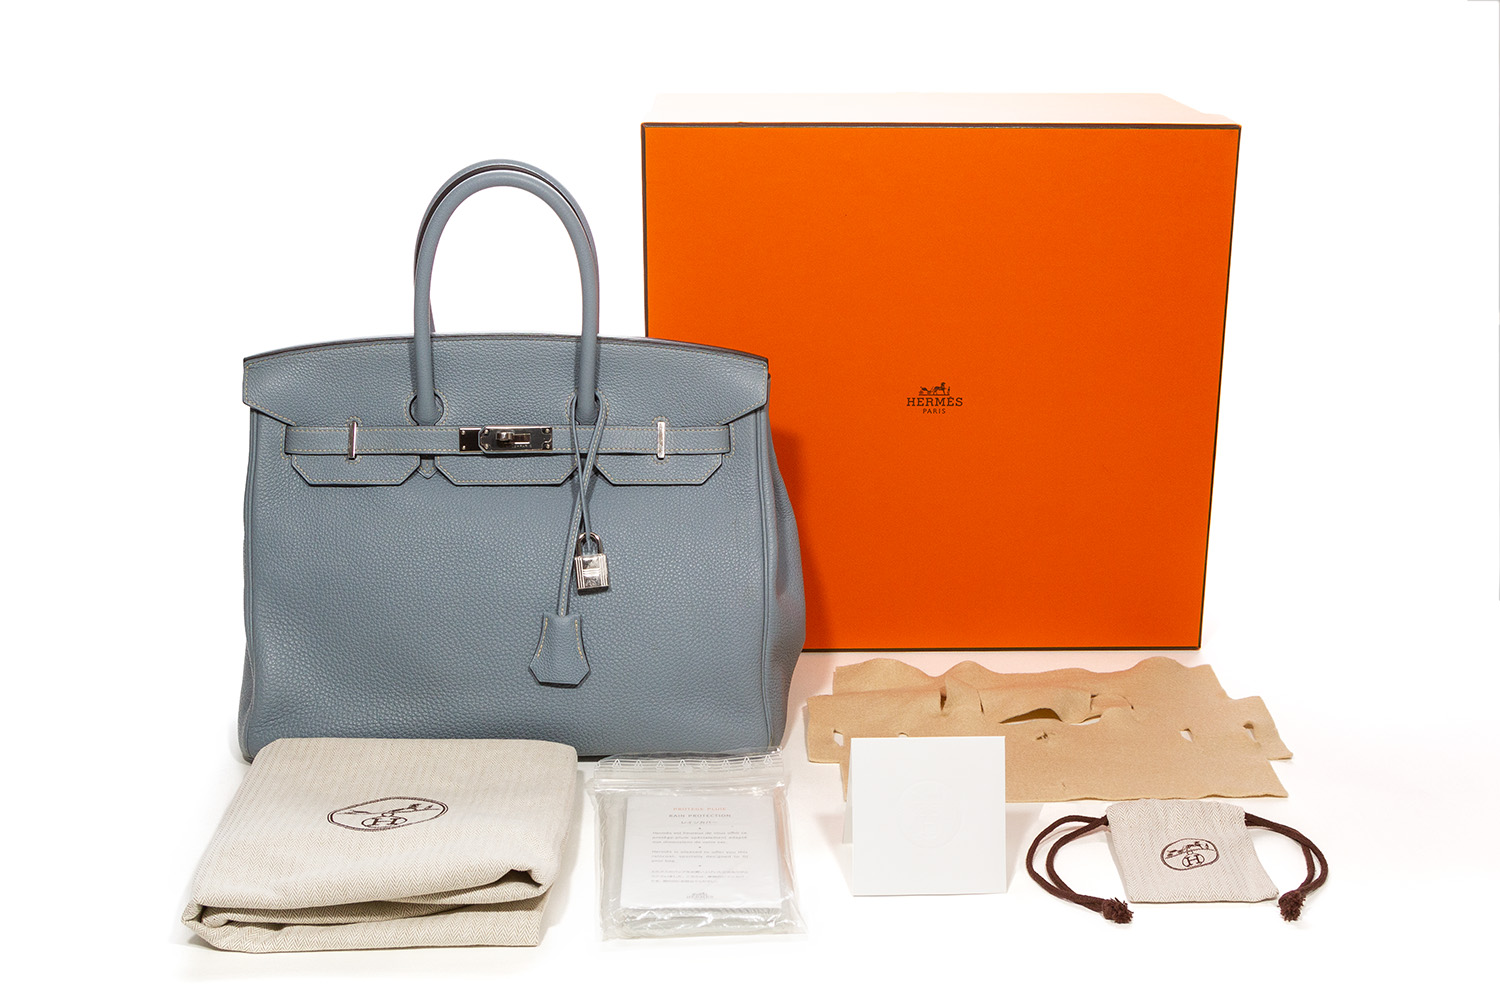 Hermes 35cm Blue Lin Togo Leather Birkin Bag with Palladium